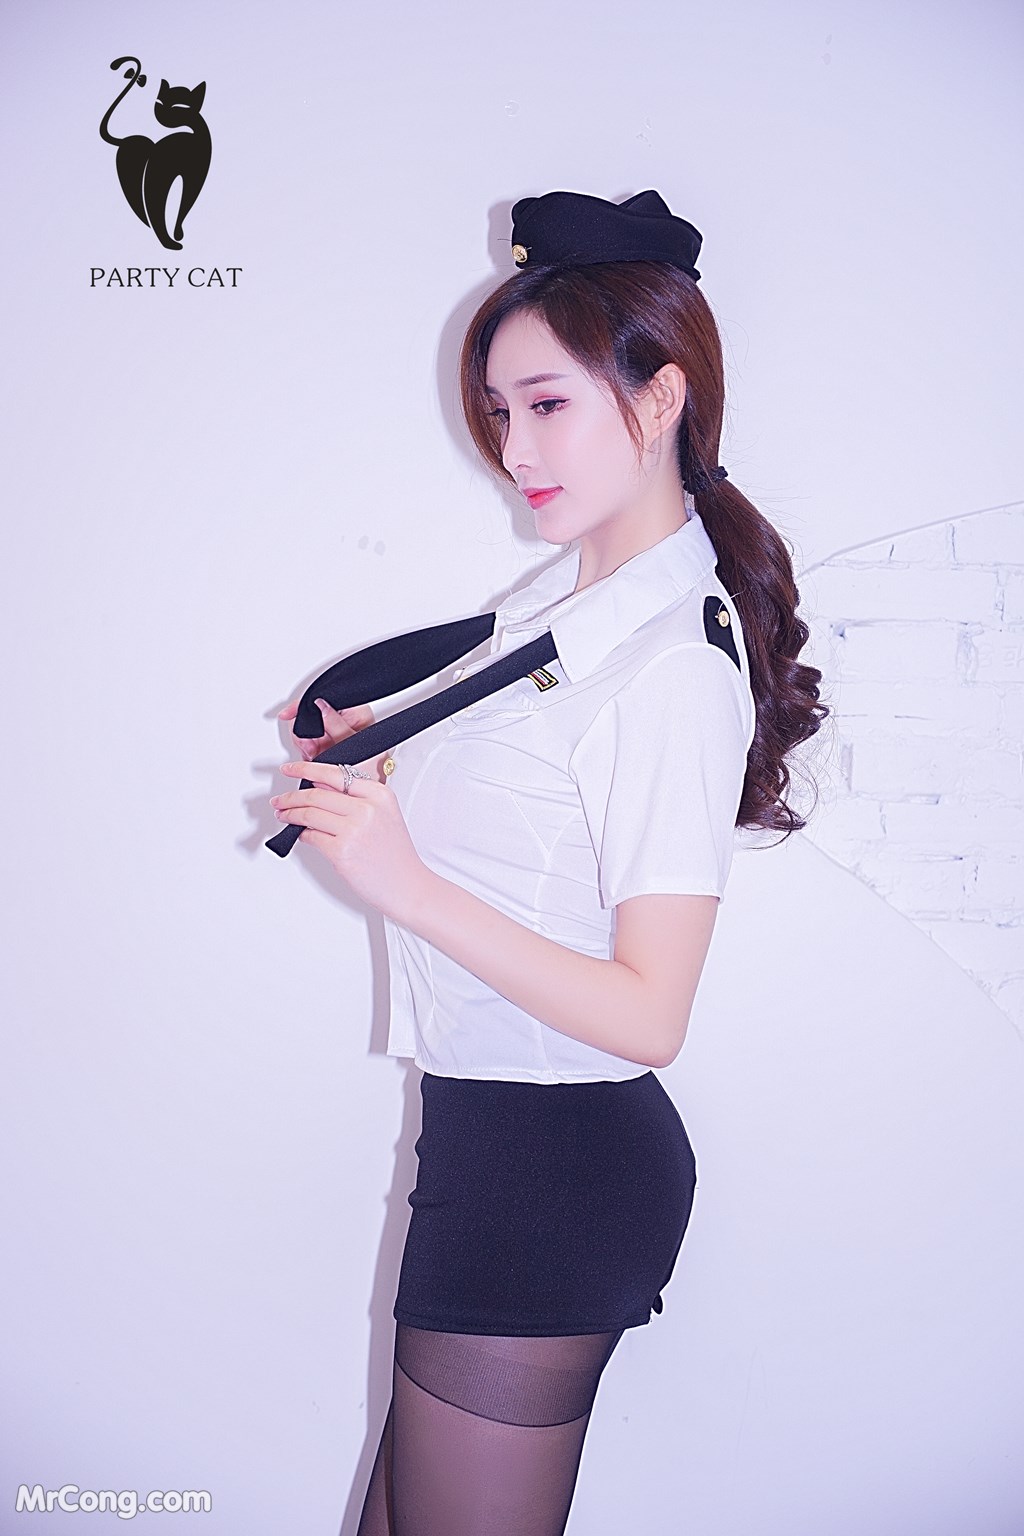 PartyCat Vol.065: Model 土肥 圆 矮 挫 穷 (Tu Fei Yuan Ai Cuo Qiong) (50 photos) photo 2-4